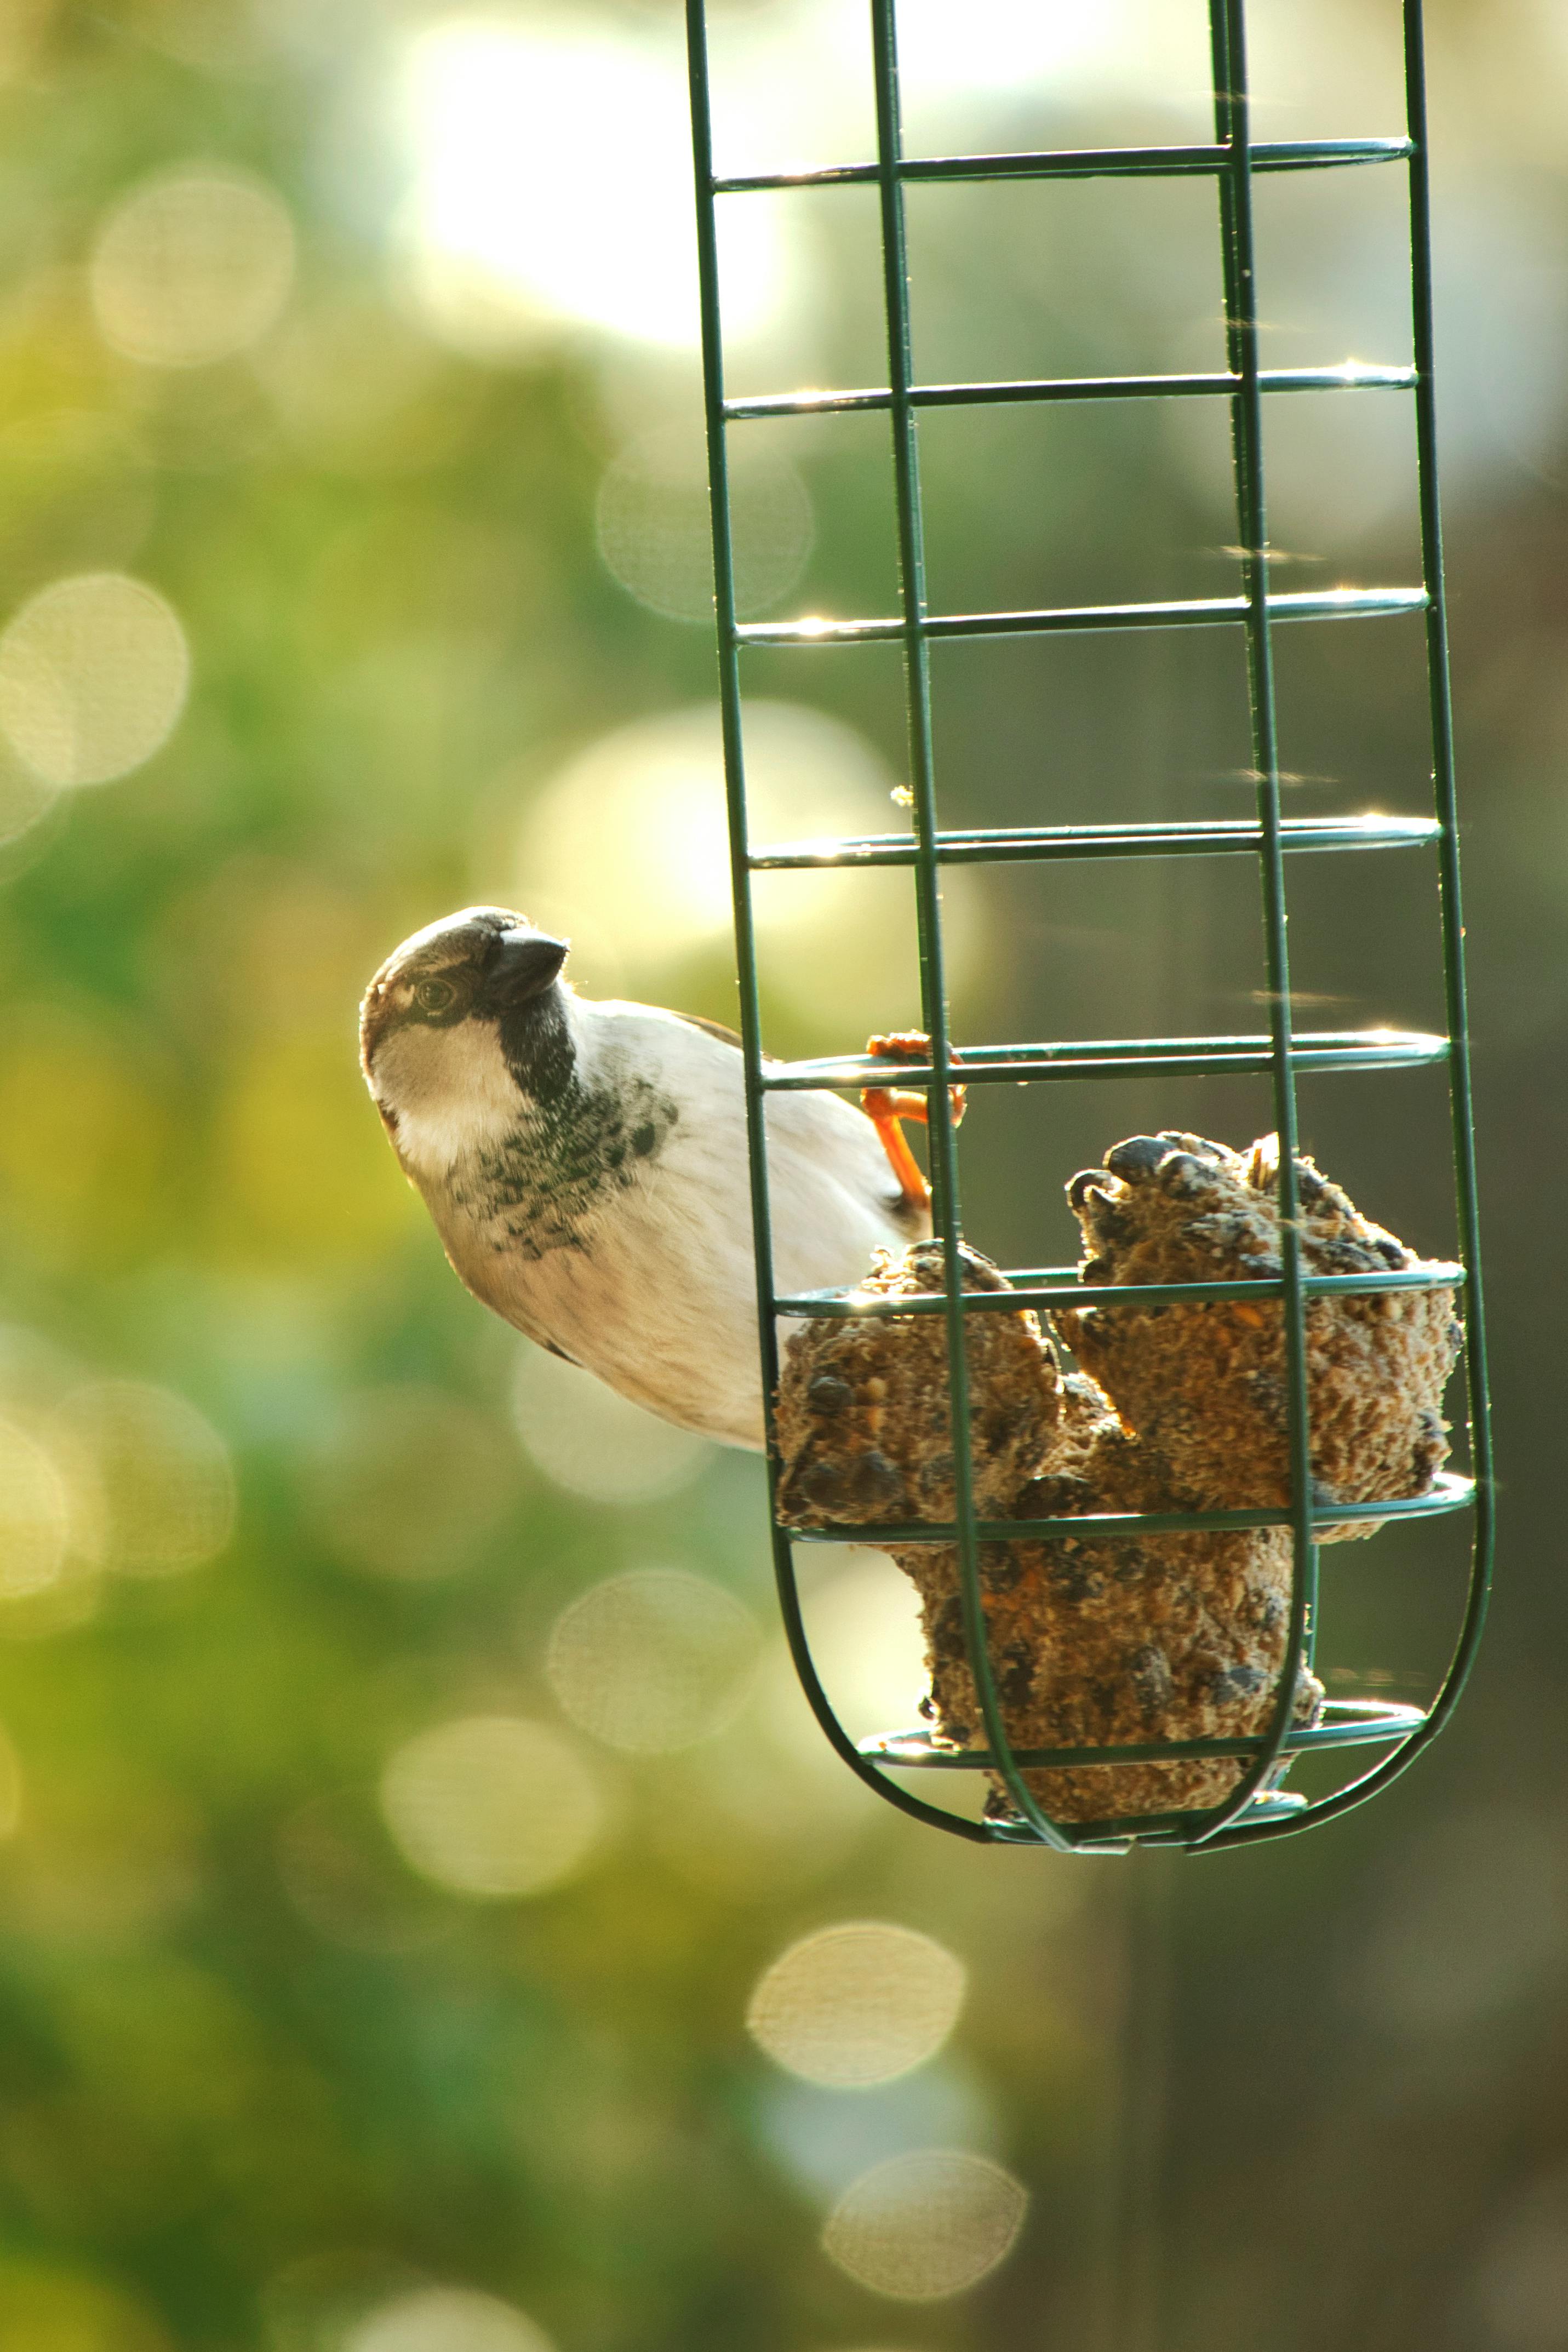 Hanging the Bird Feeder - Hanging bird feeder